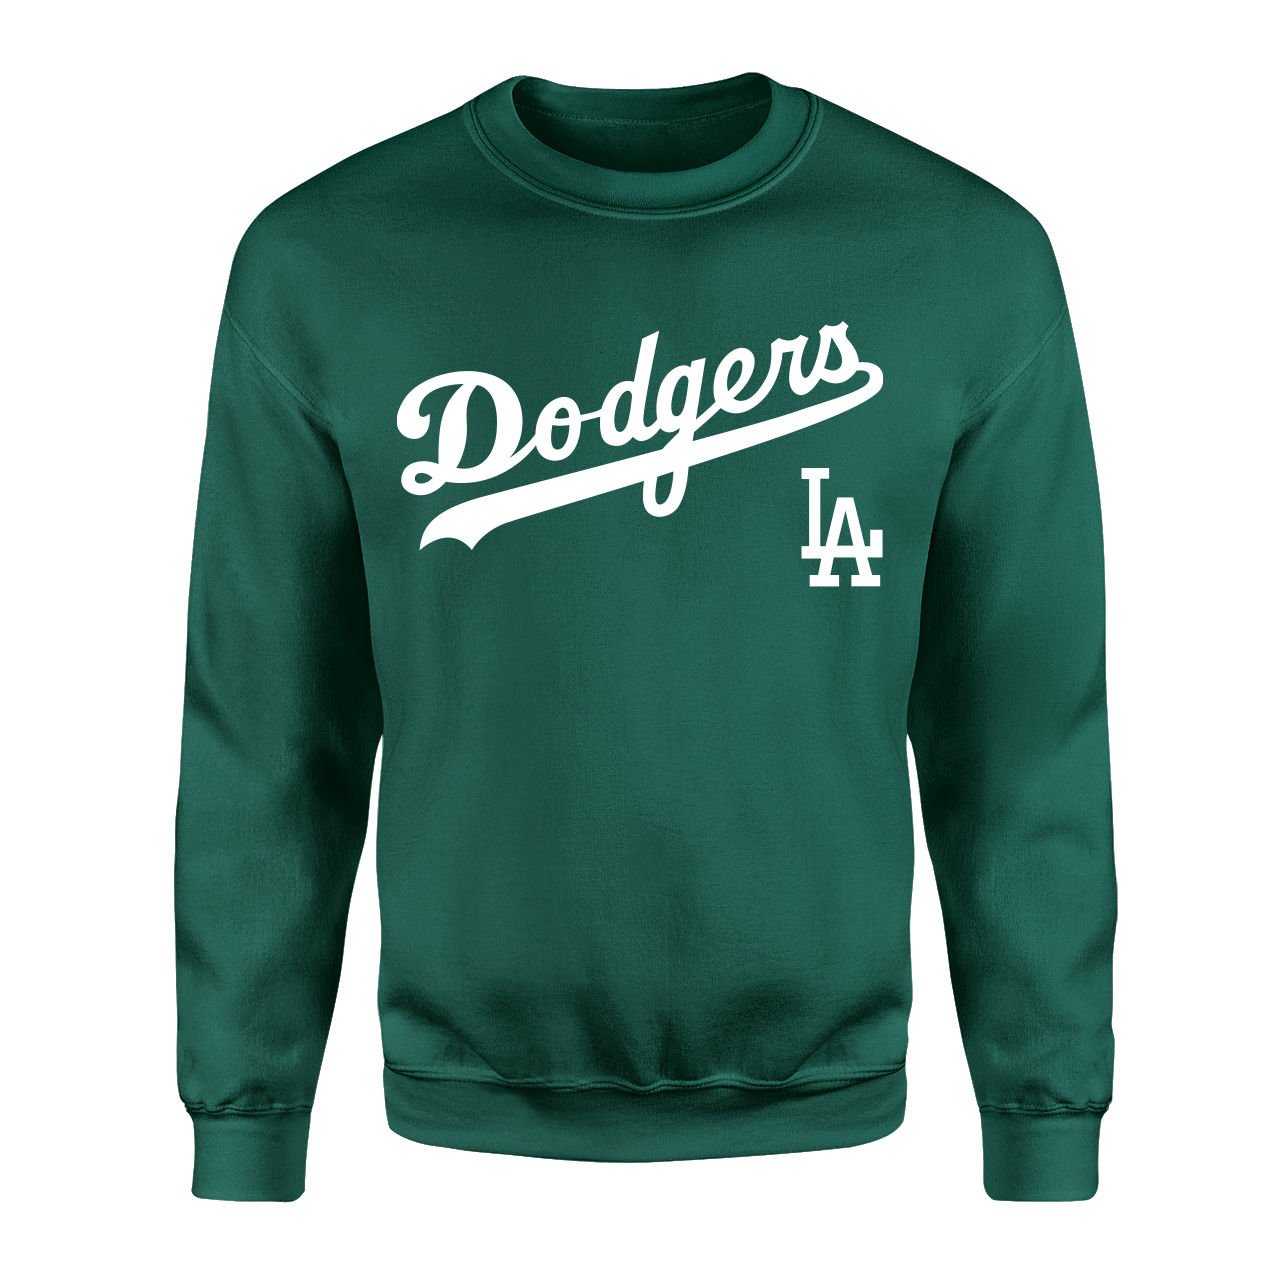 LA Dodgers Nefti Yeşili Sweatshirt